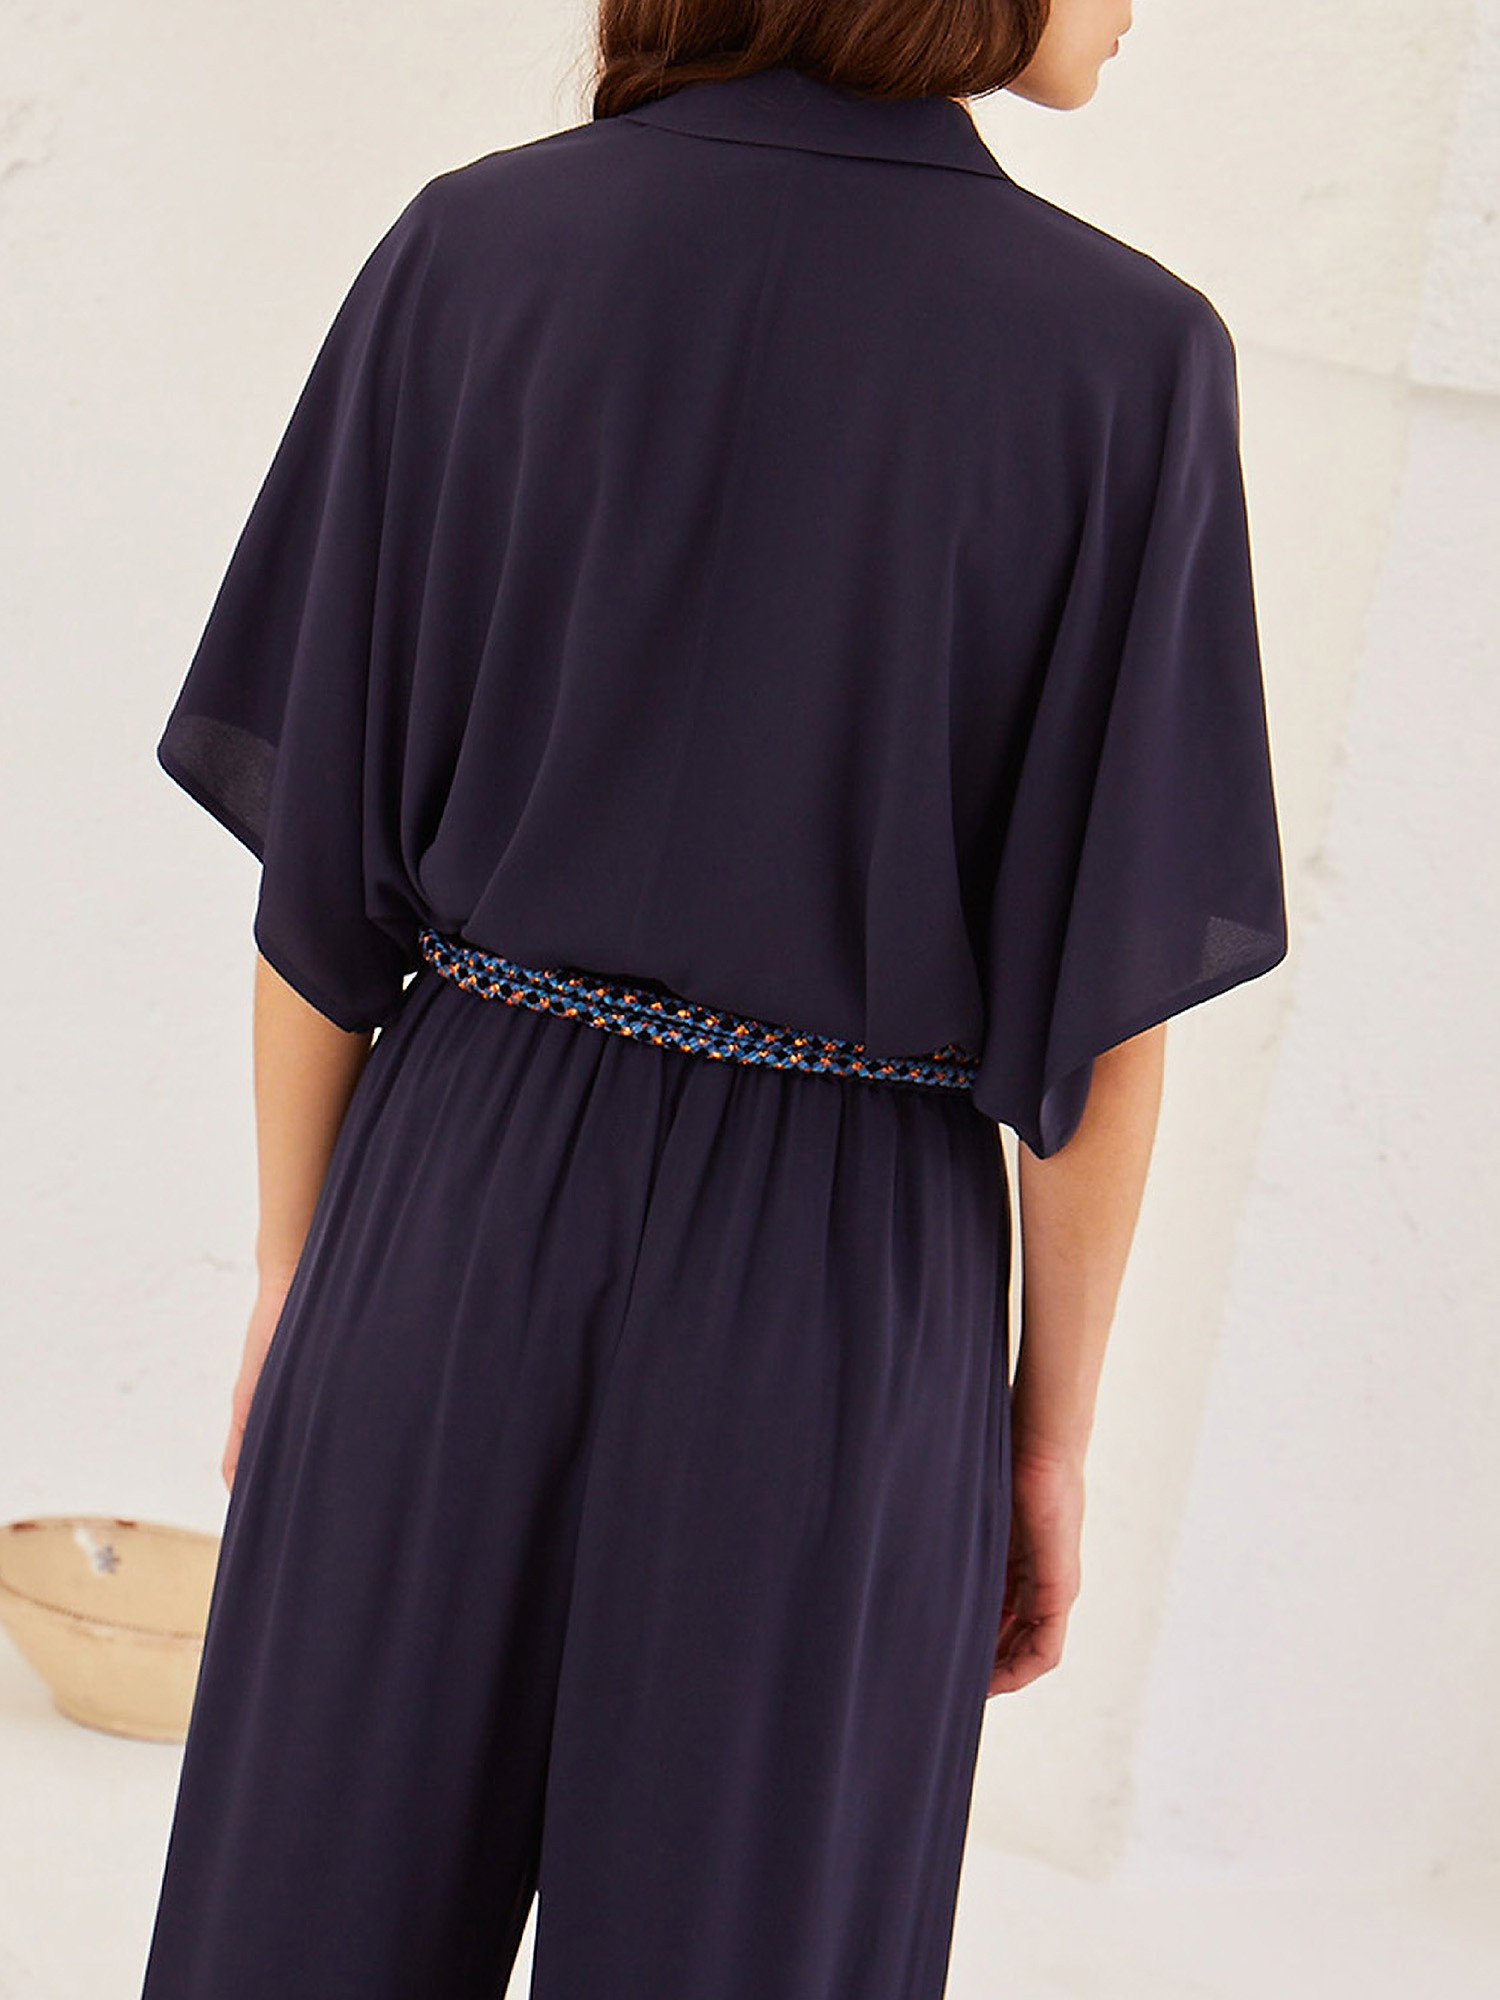 Momonì - Brooklyn shirt in cràªpe-silk blend, Dark Blue, large image number 2